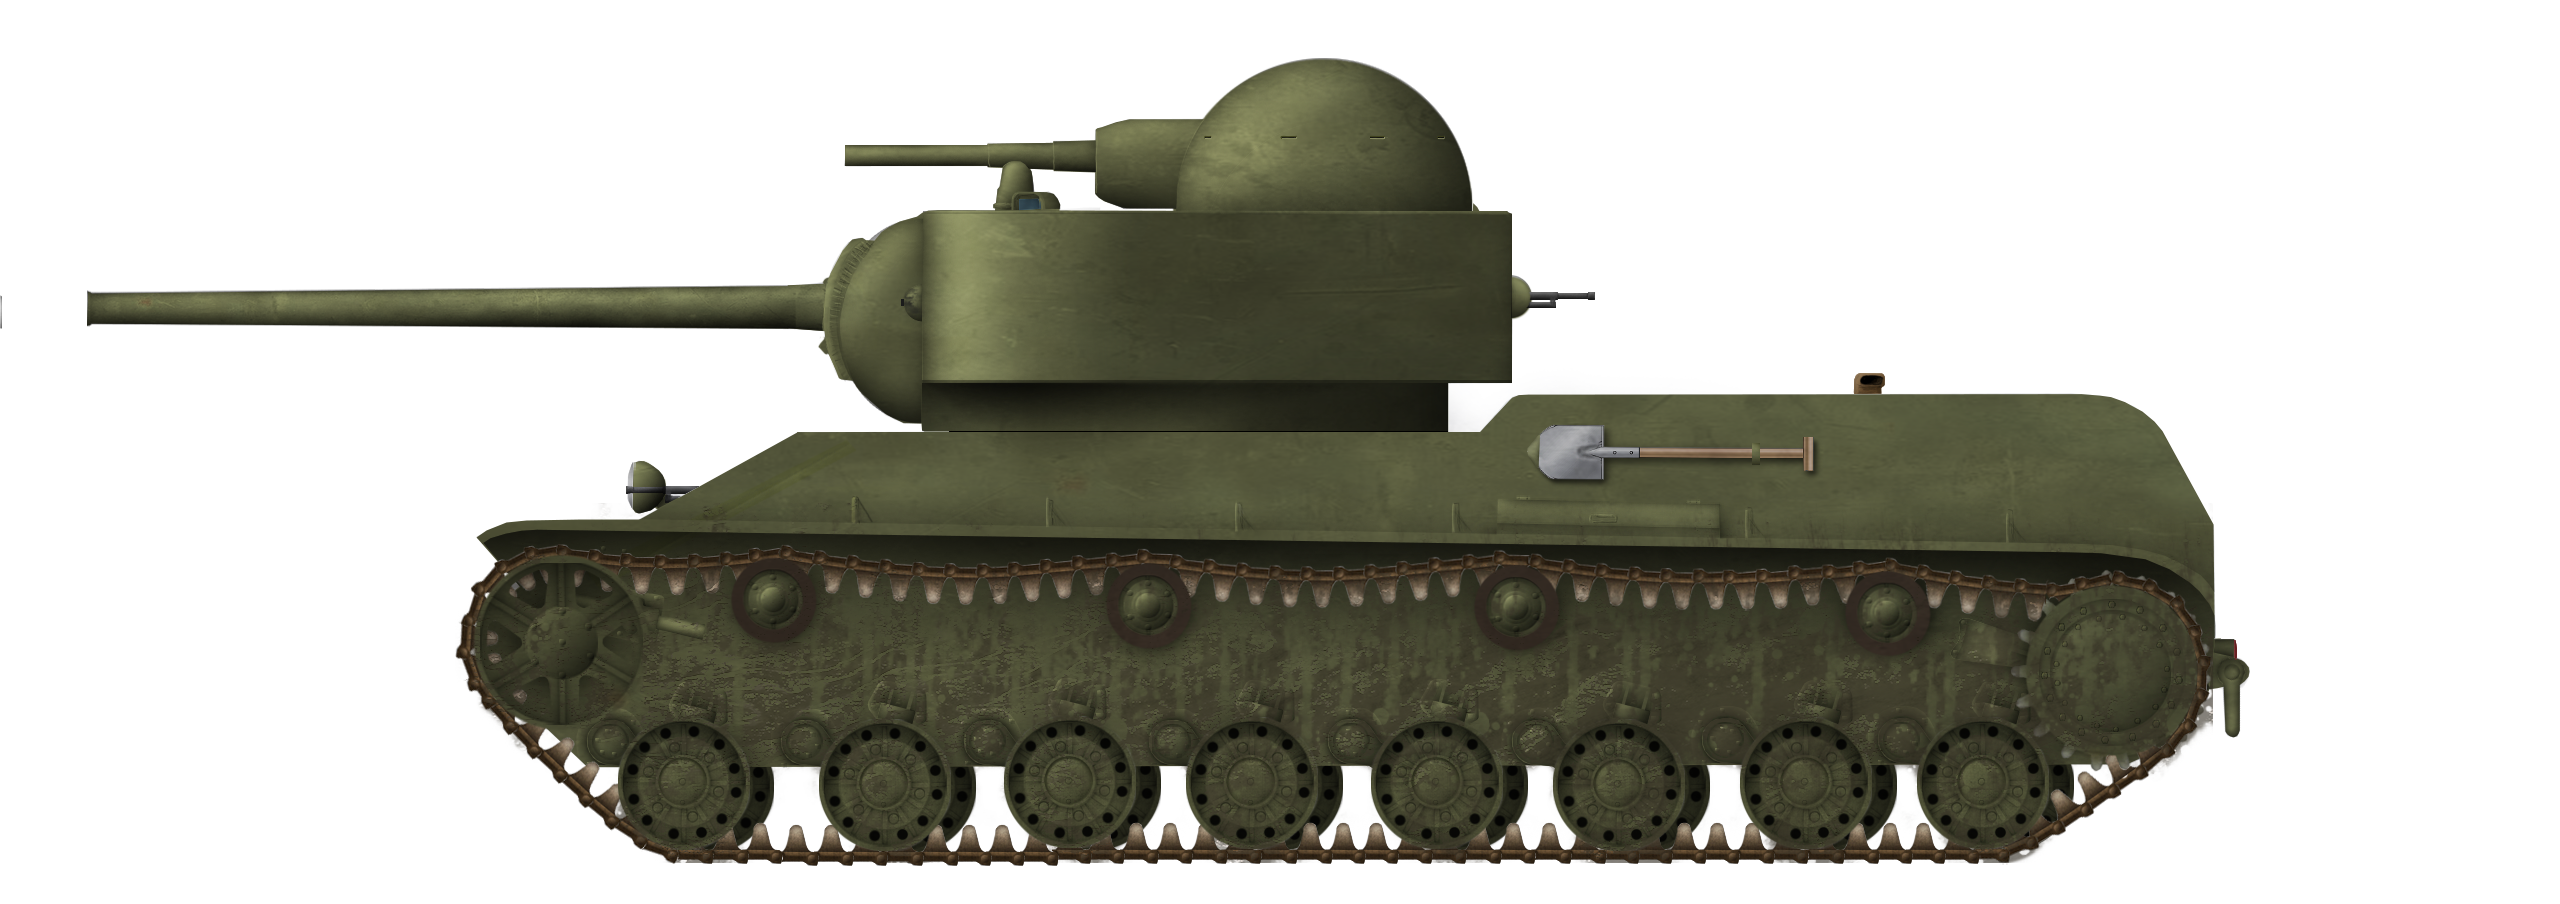 File:Front view of a T-54 tank.JPEG - Wikipedia